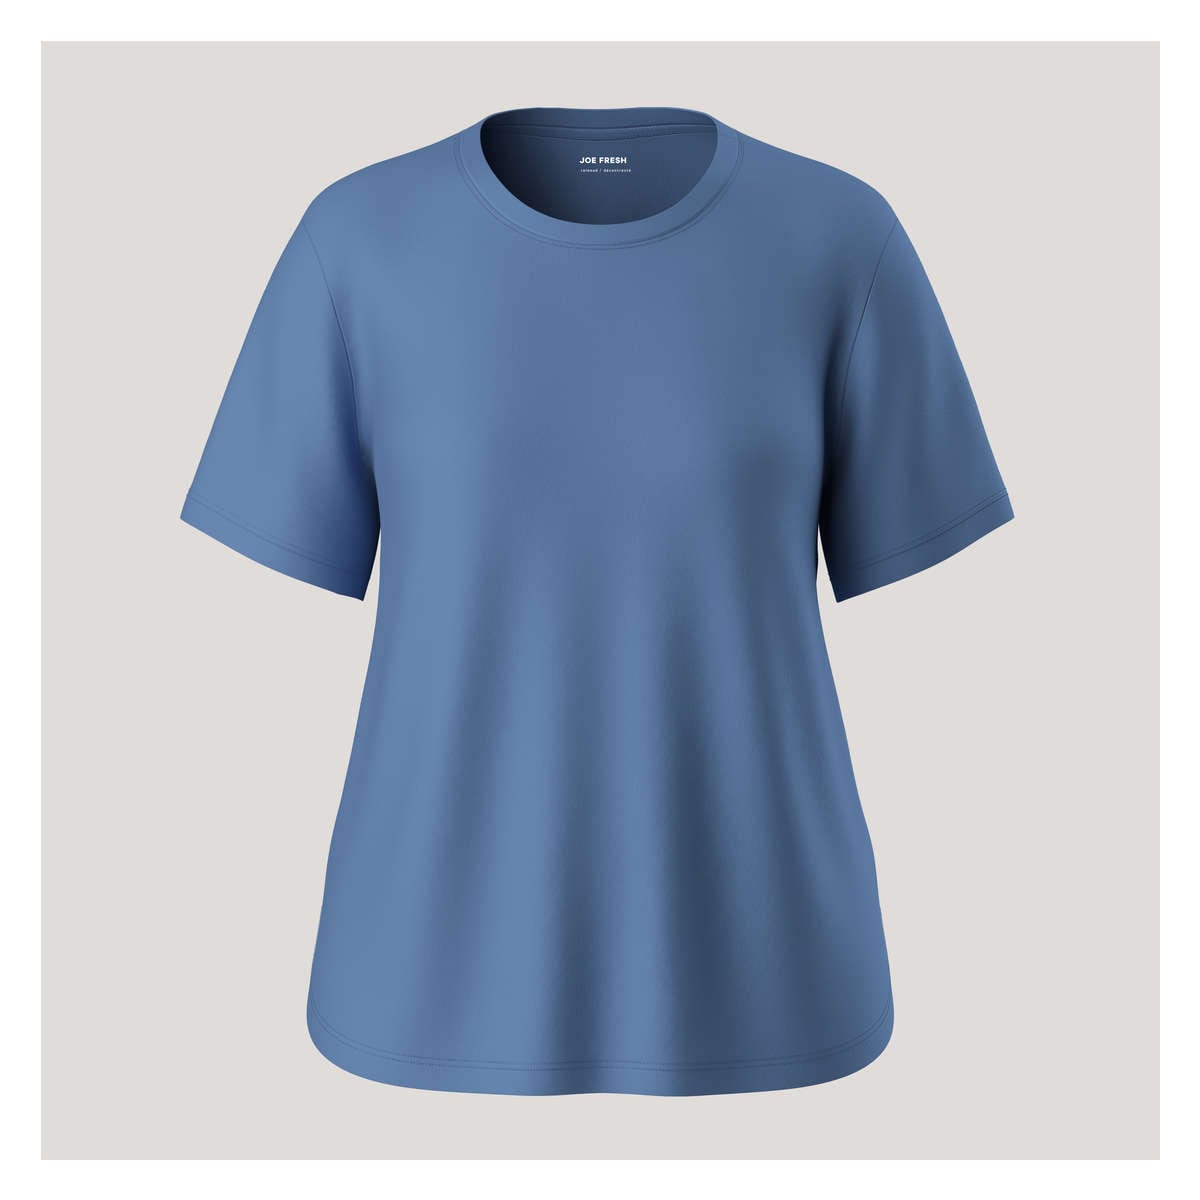 Relaxed T-Shirt in Dusty Blue from Joe Fresh